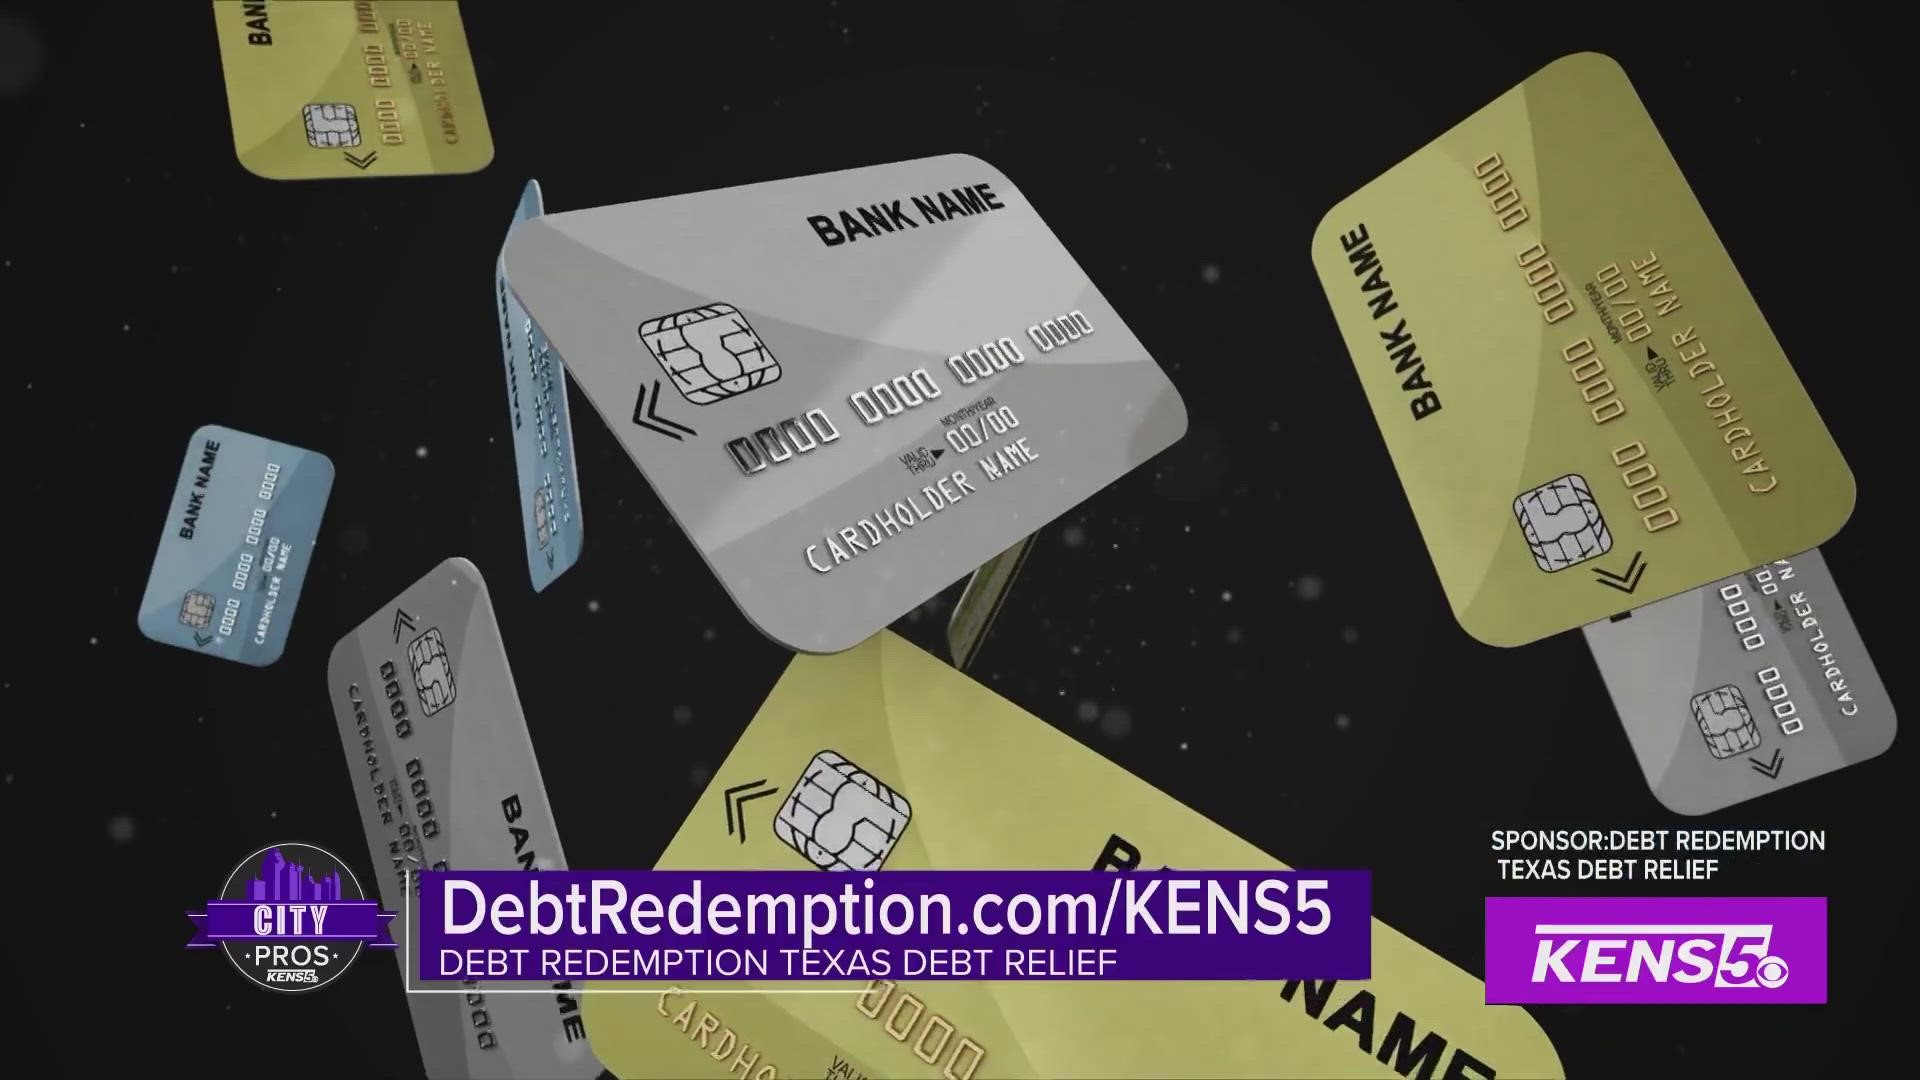 Sponsored by: Debt Redemption Texas Debt Relief